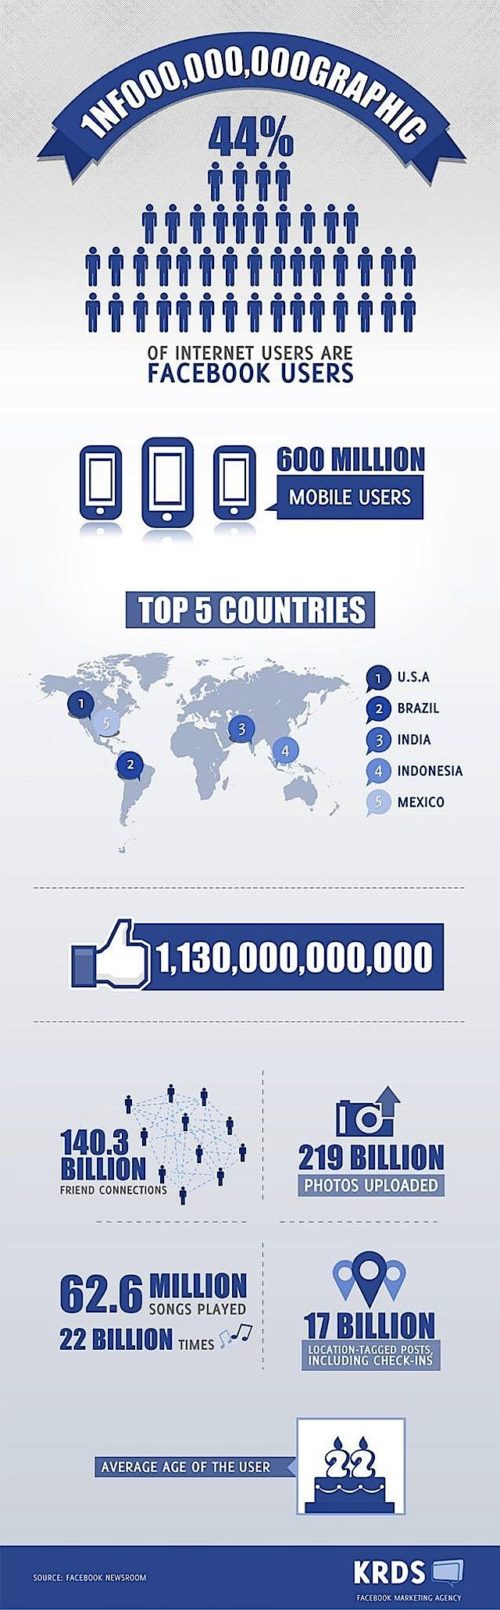 Facebook-infographic-1-billion